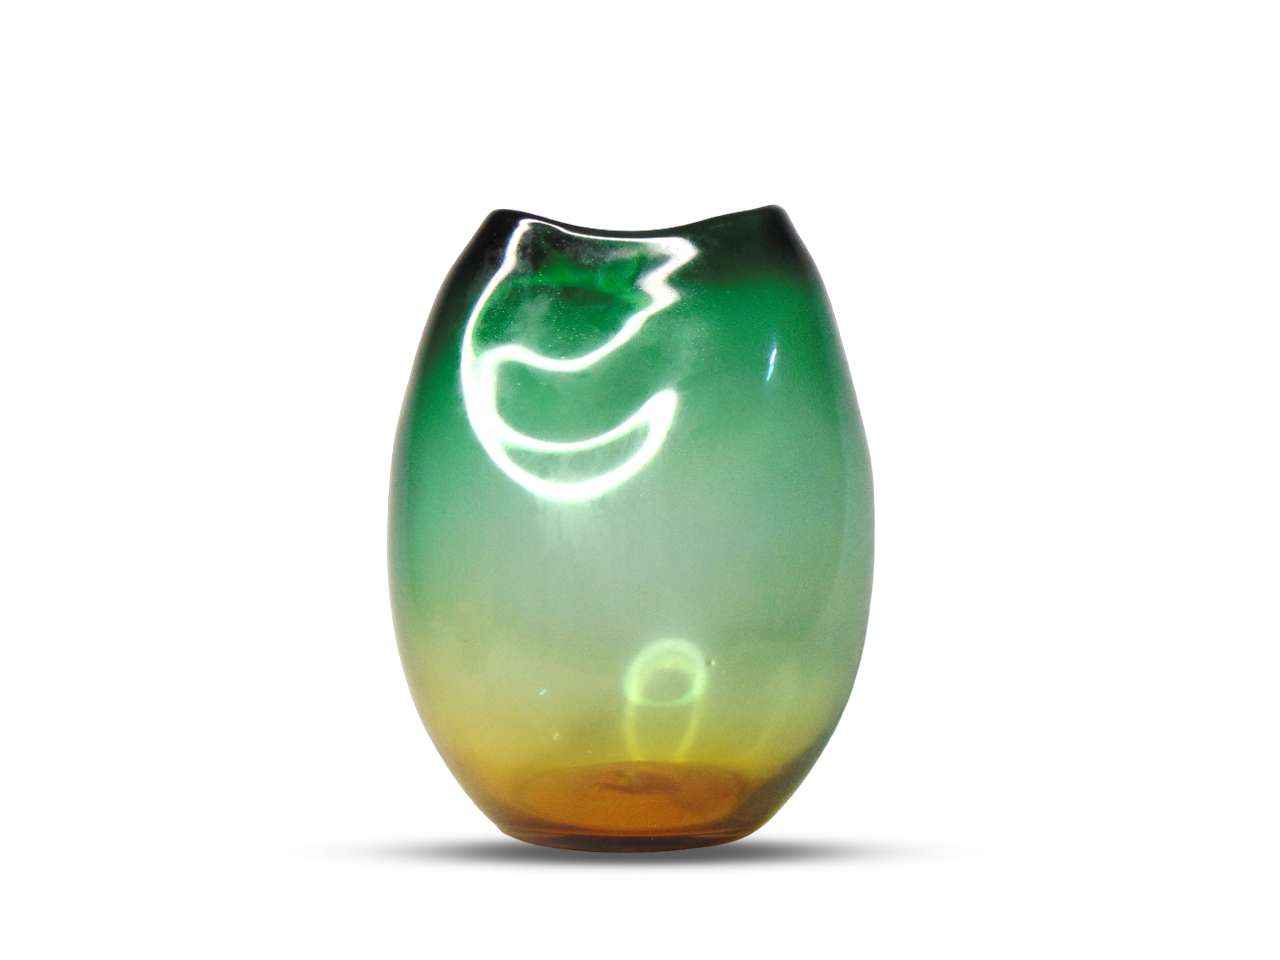 ADLQ-Vase-A-green & gray